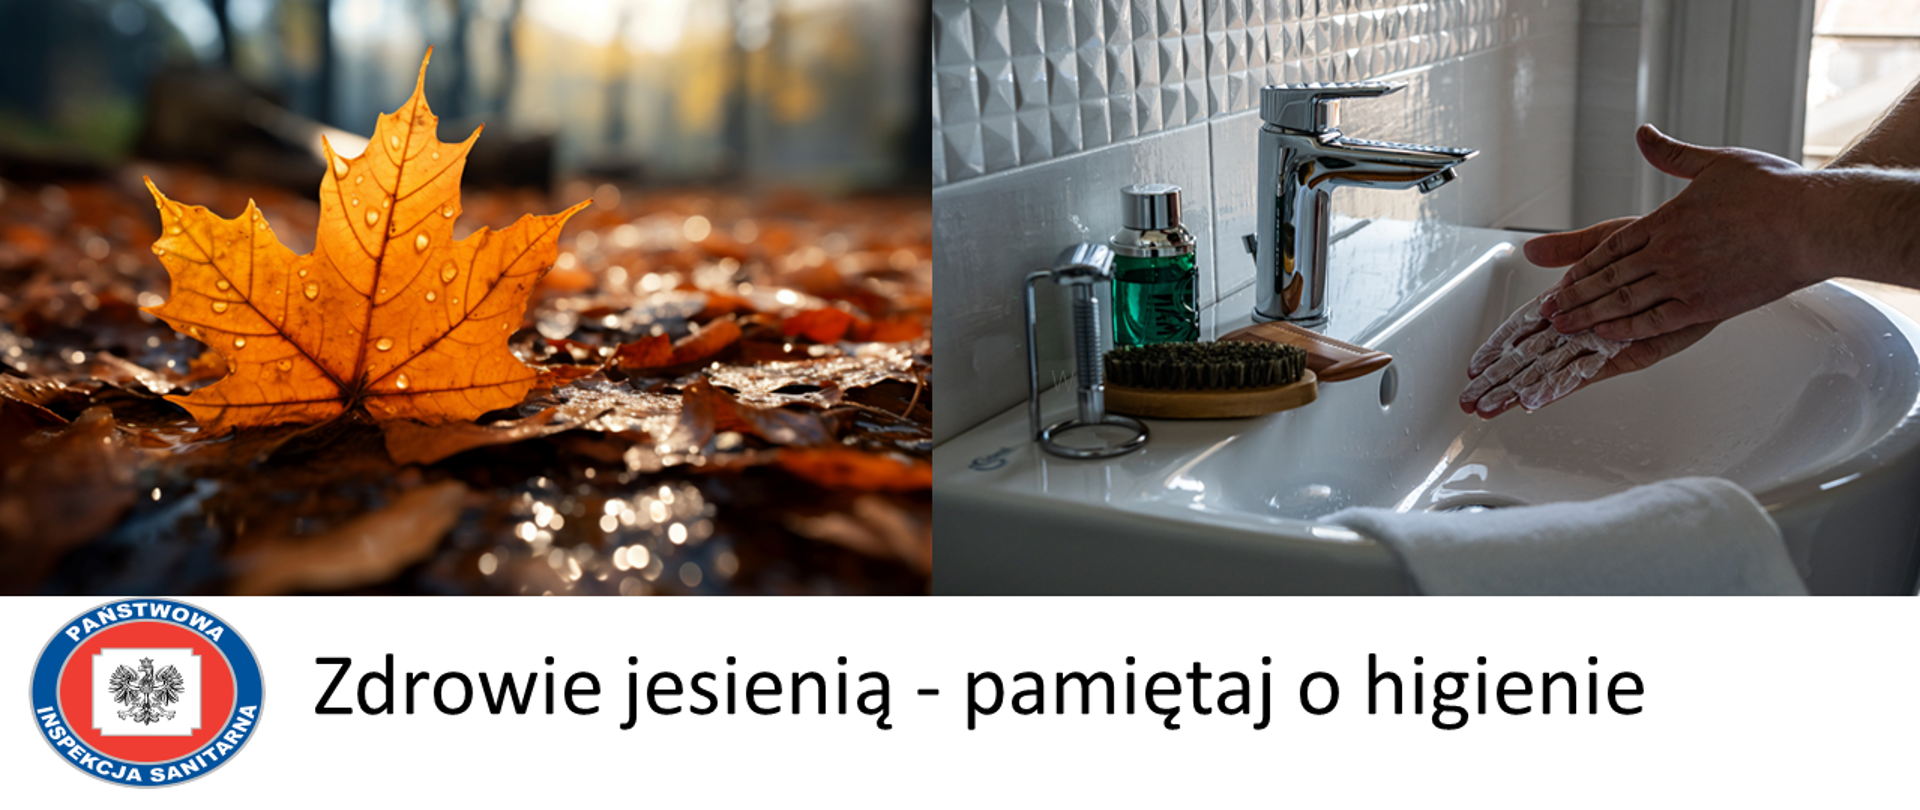 higiena_